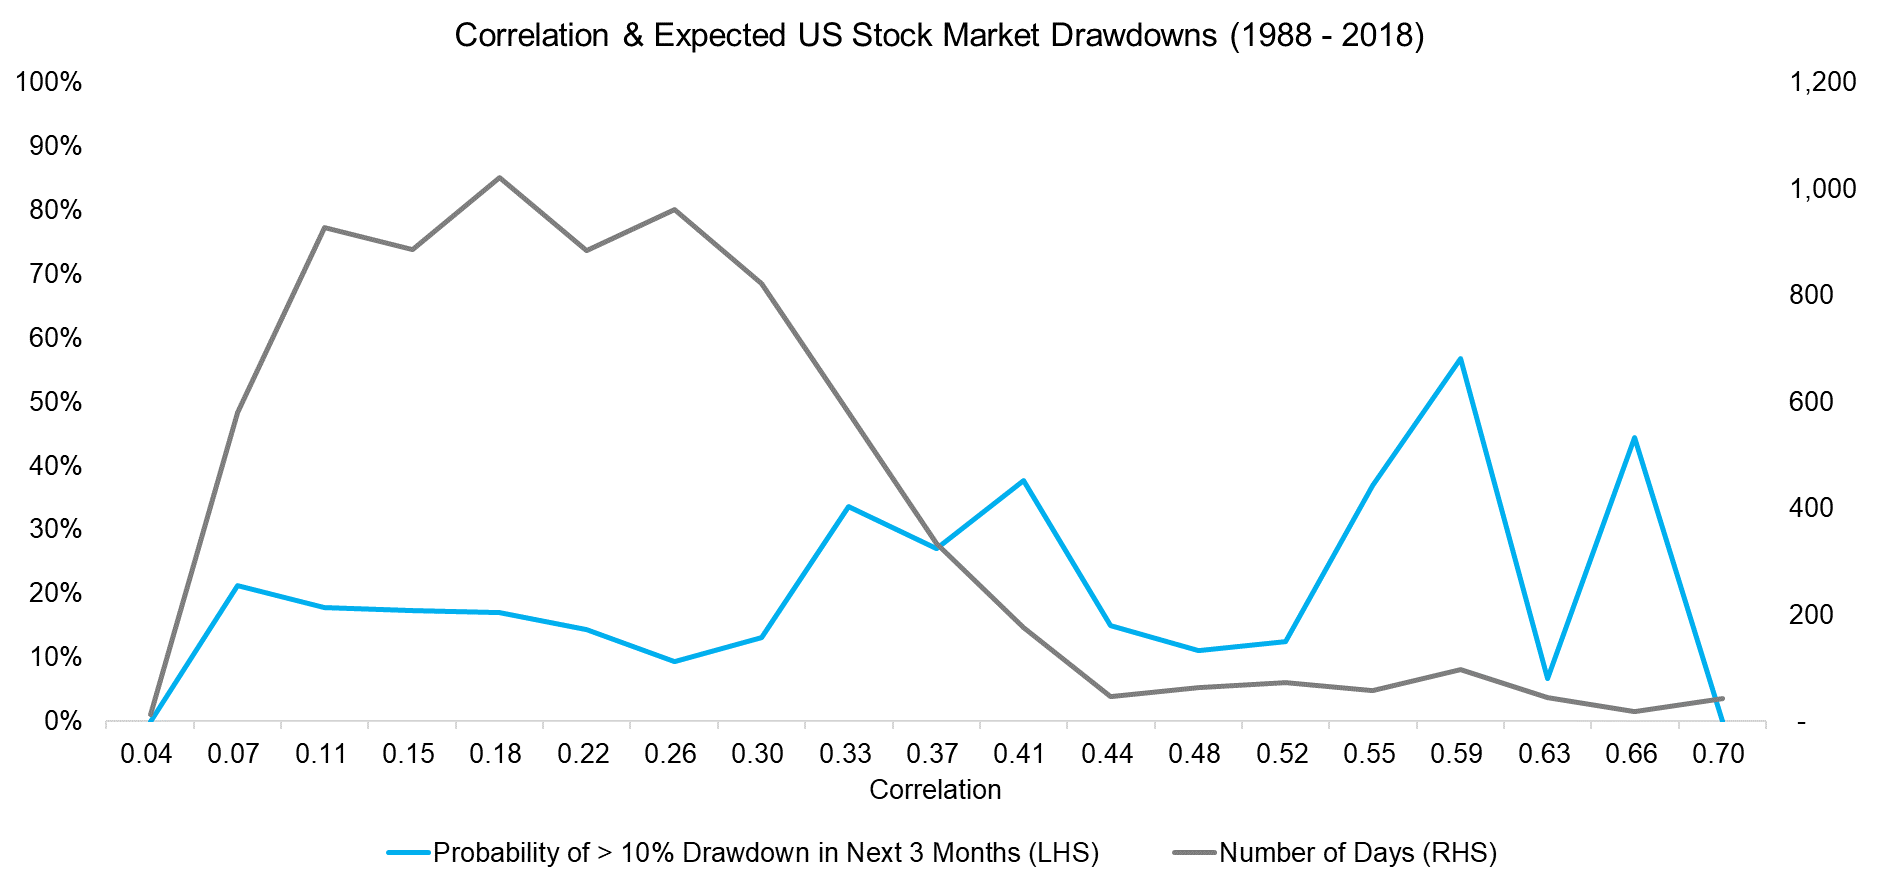 Correlation & Expected US Stock Market Drawdowns (1988 - 2018)